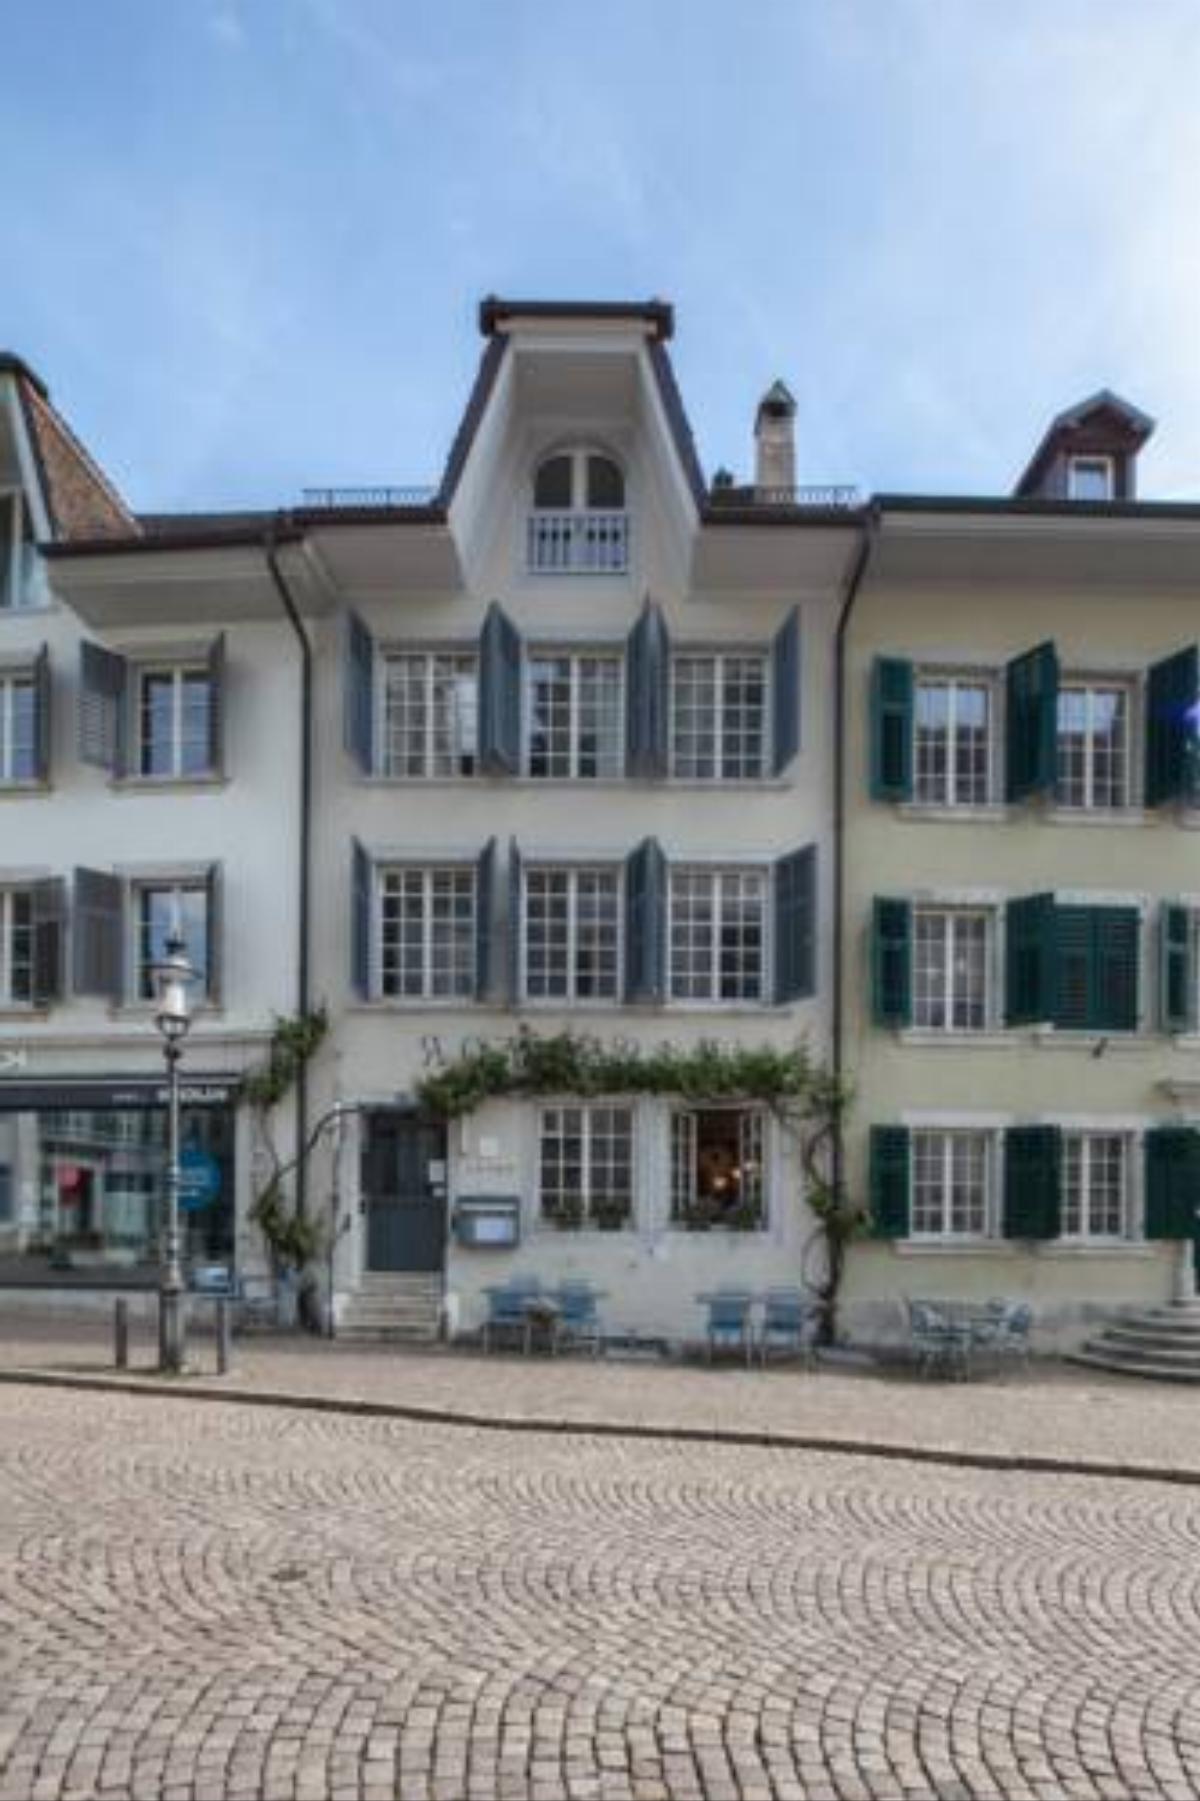 Baseltor Hotel & Restaurant Hotel Solothurn Switzerland